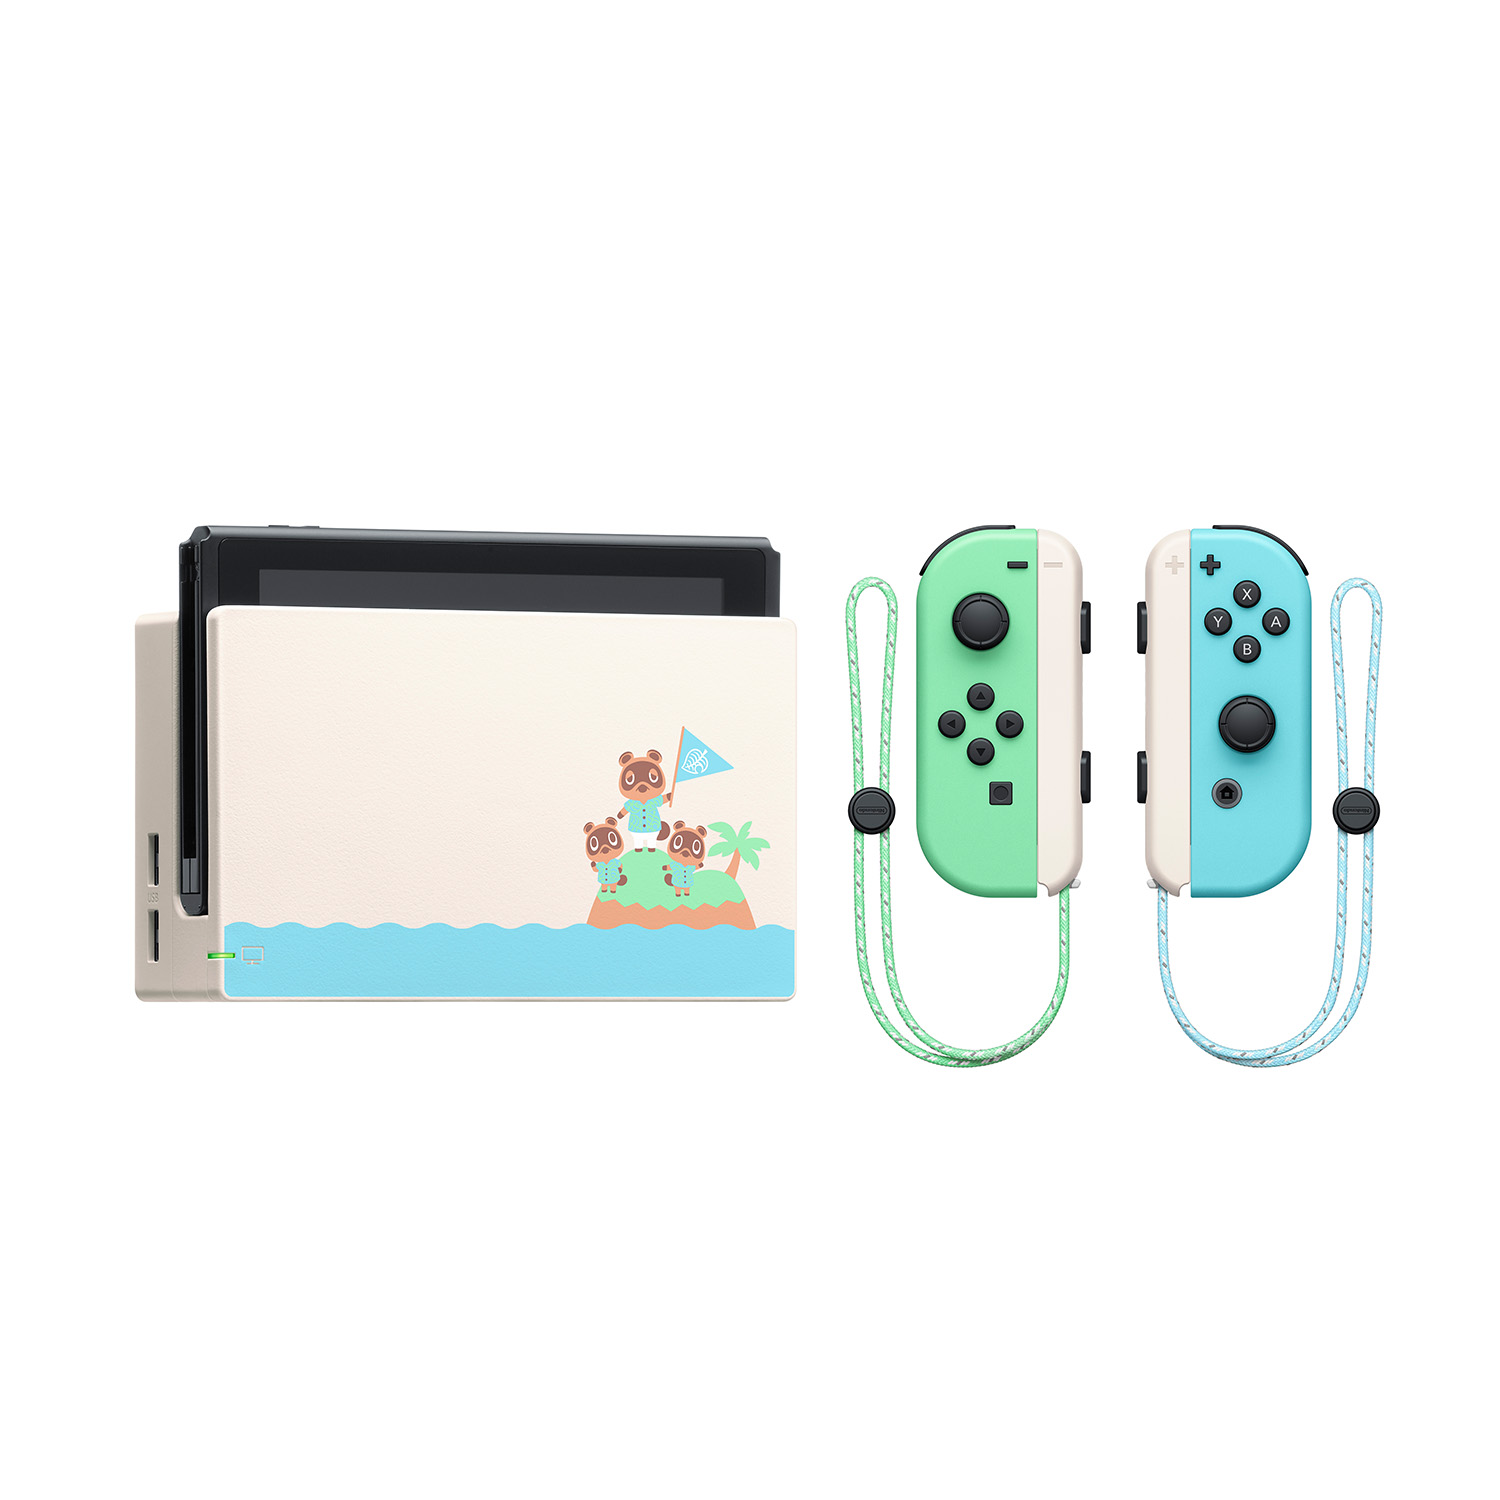 Nintendo Switch Animal Crossing: New Horizons Console Bundle + Game - image 5 of 9